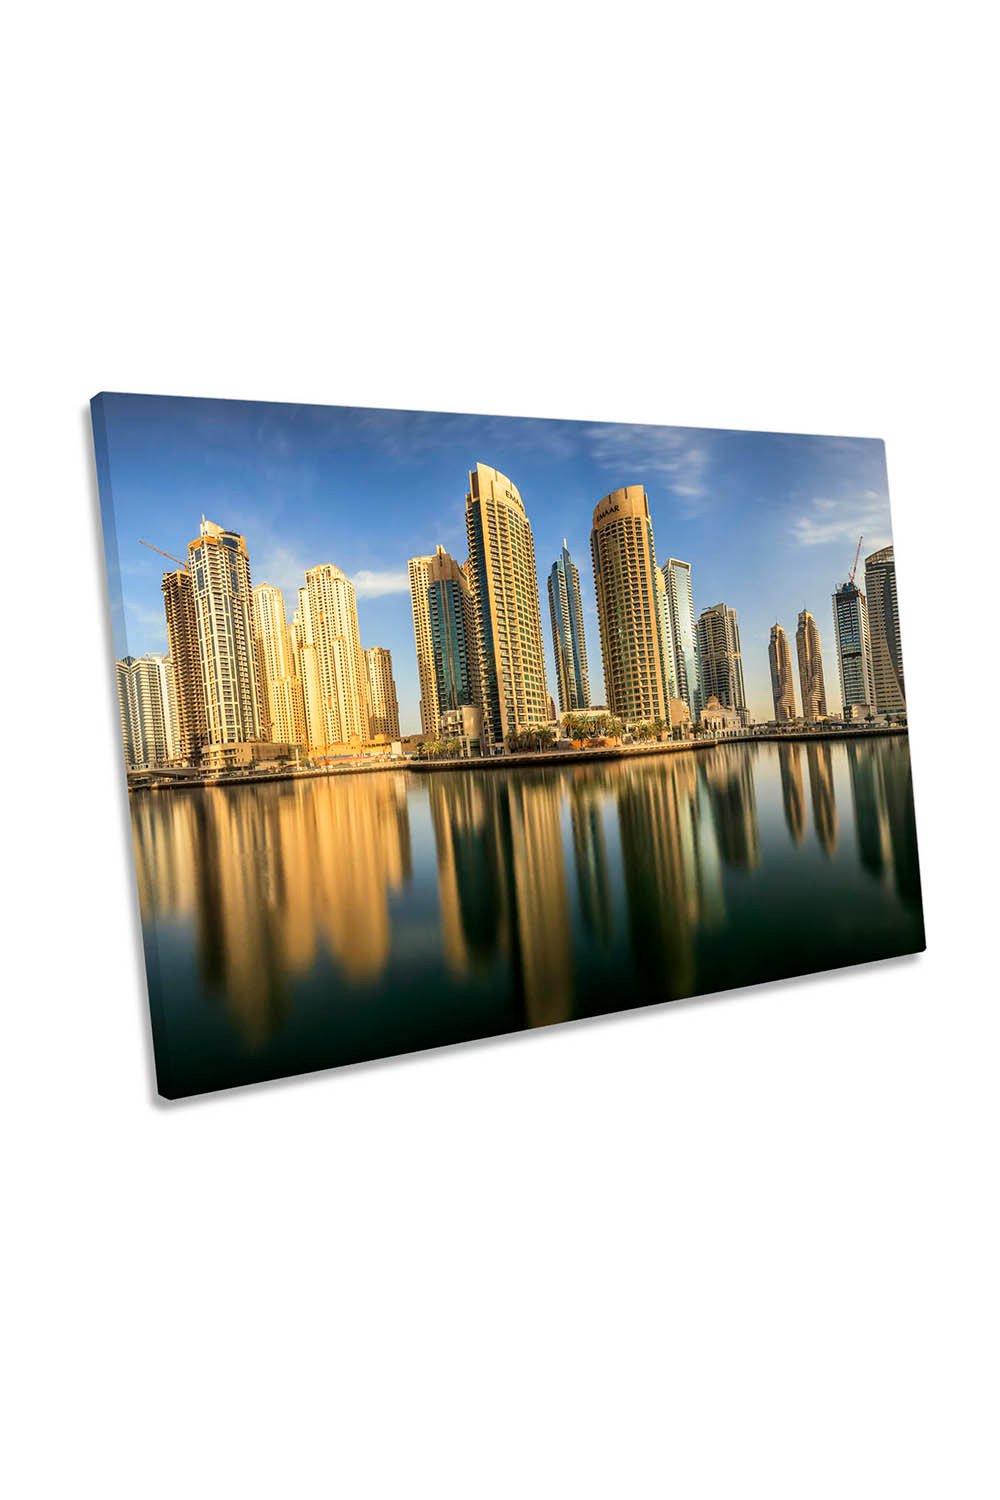 Dubai City Marina Skyline Canvas Wall Art Picture Print